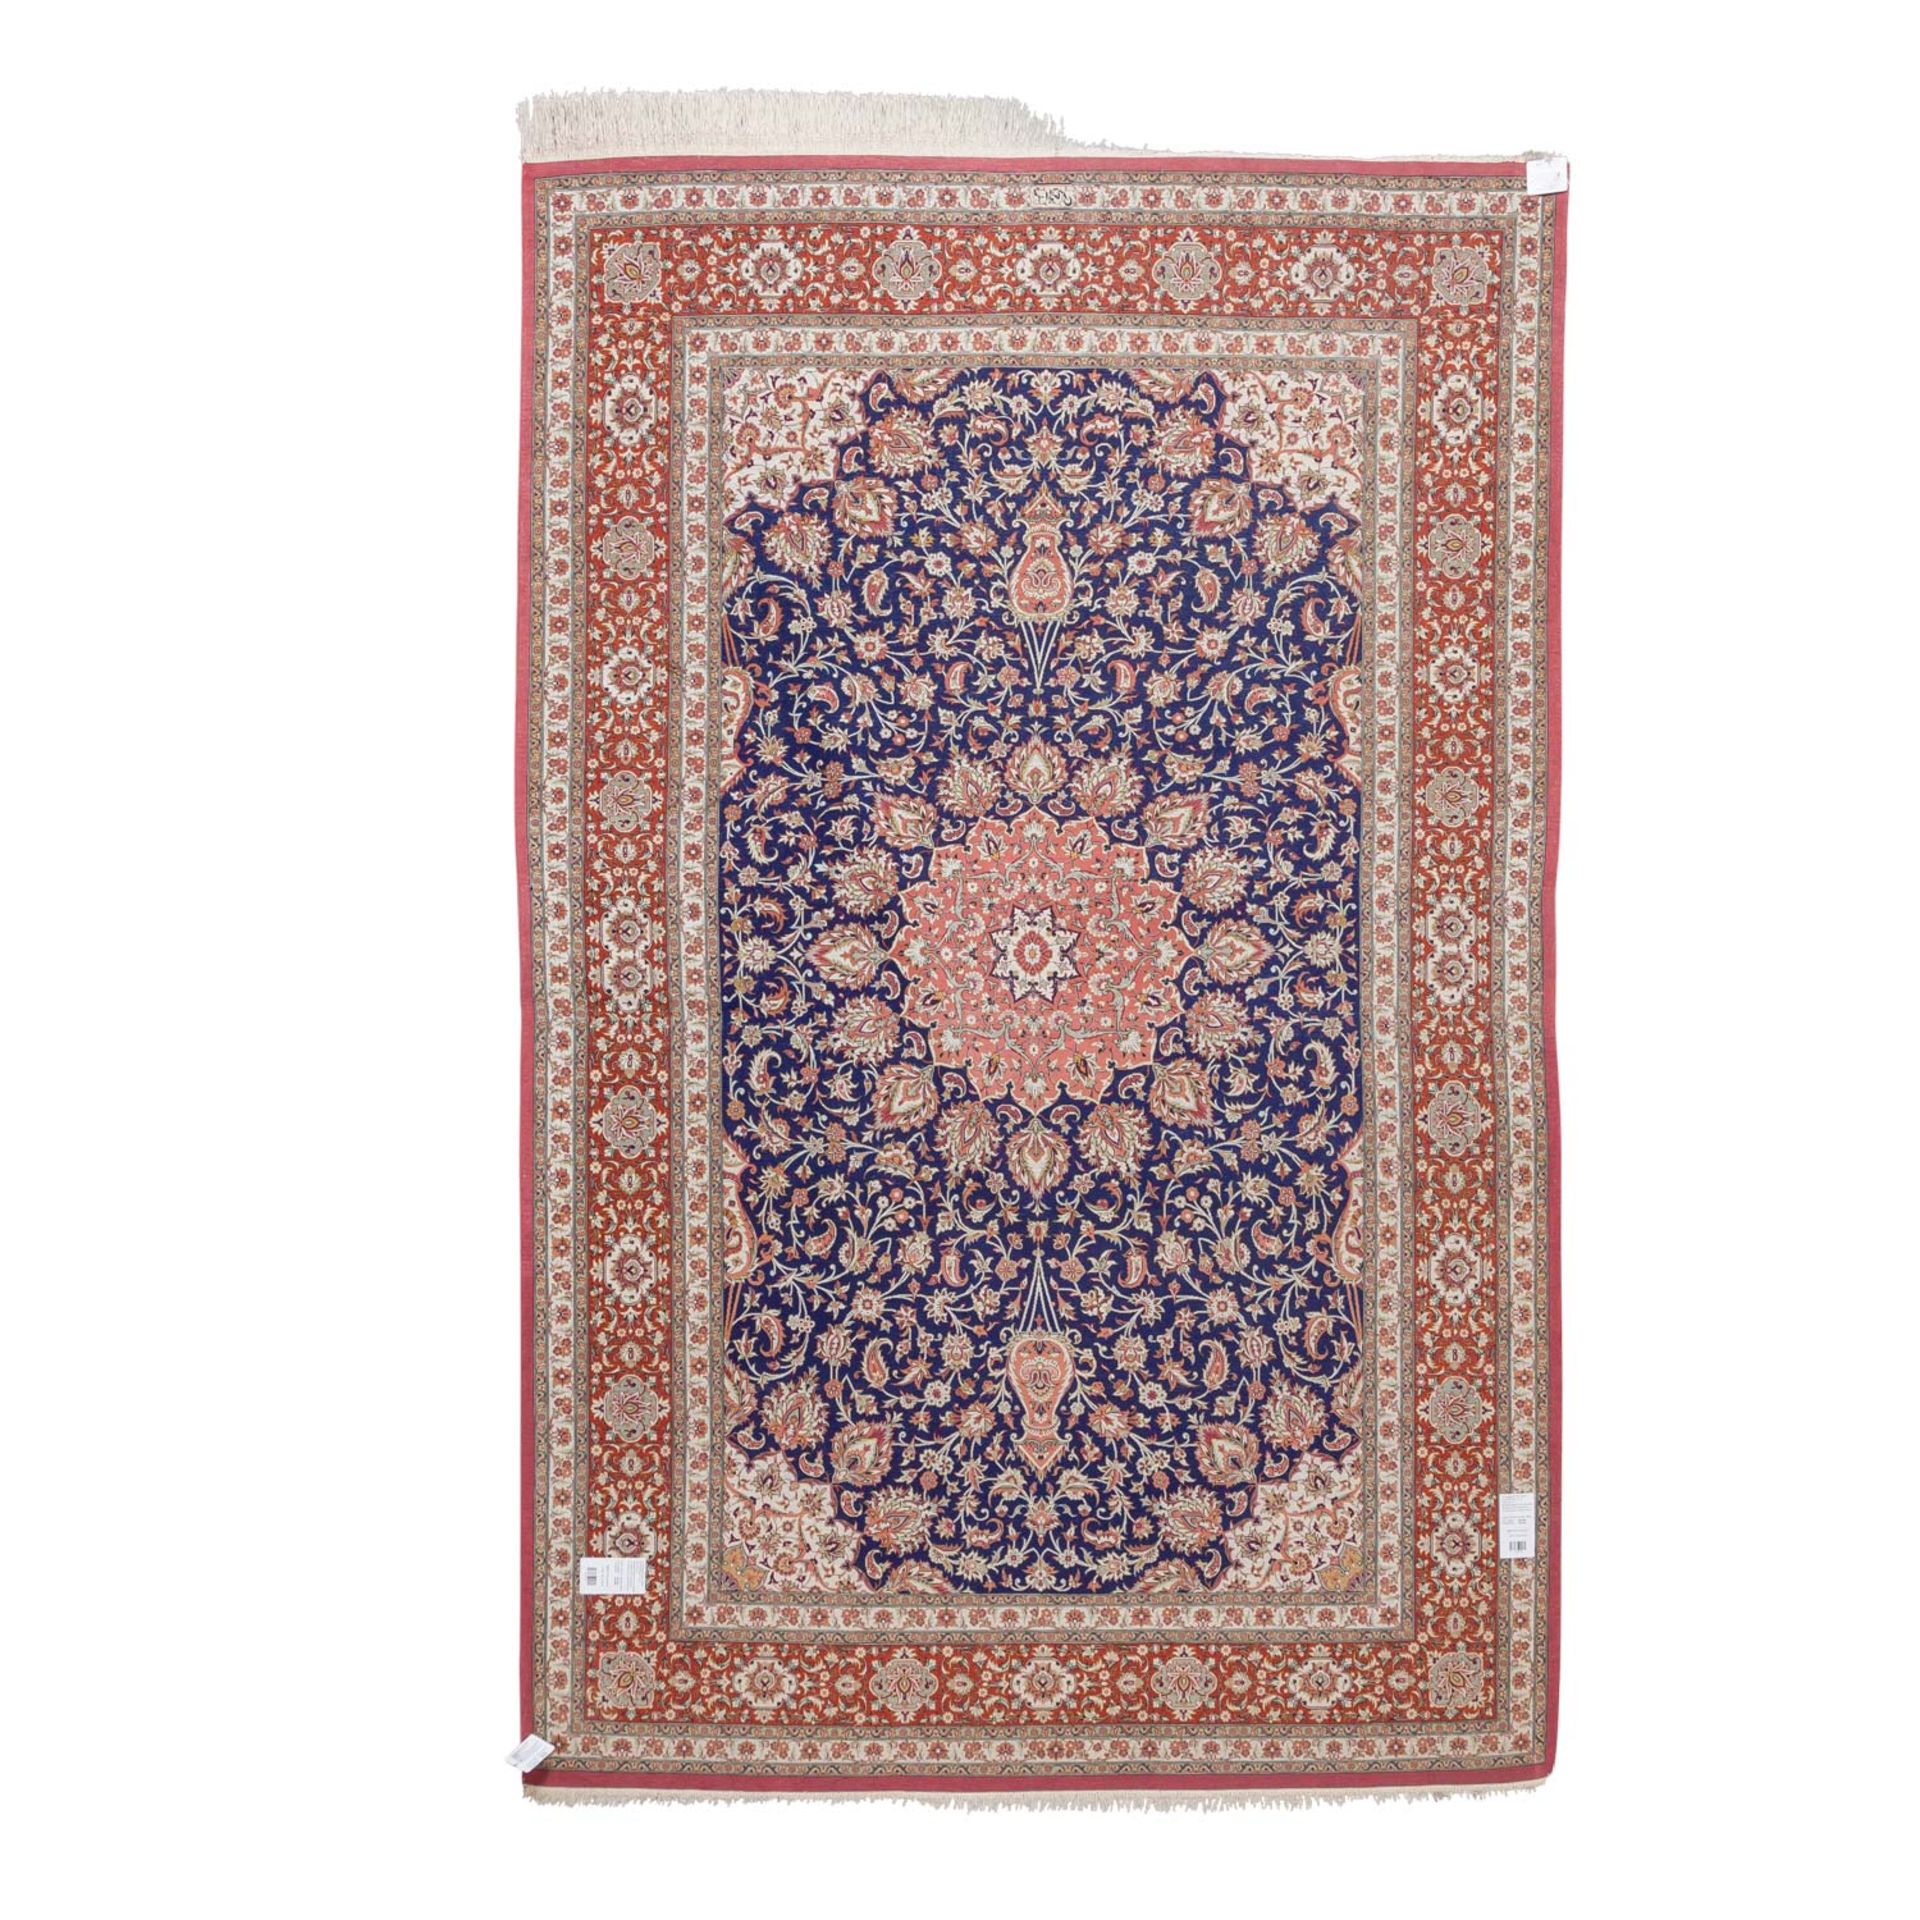 Orientteppich aus Seide. GHOM/IRAN, 20. Jh., 200x132 cm. - Image 2 of 4